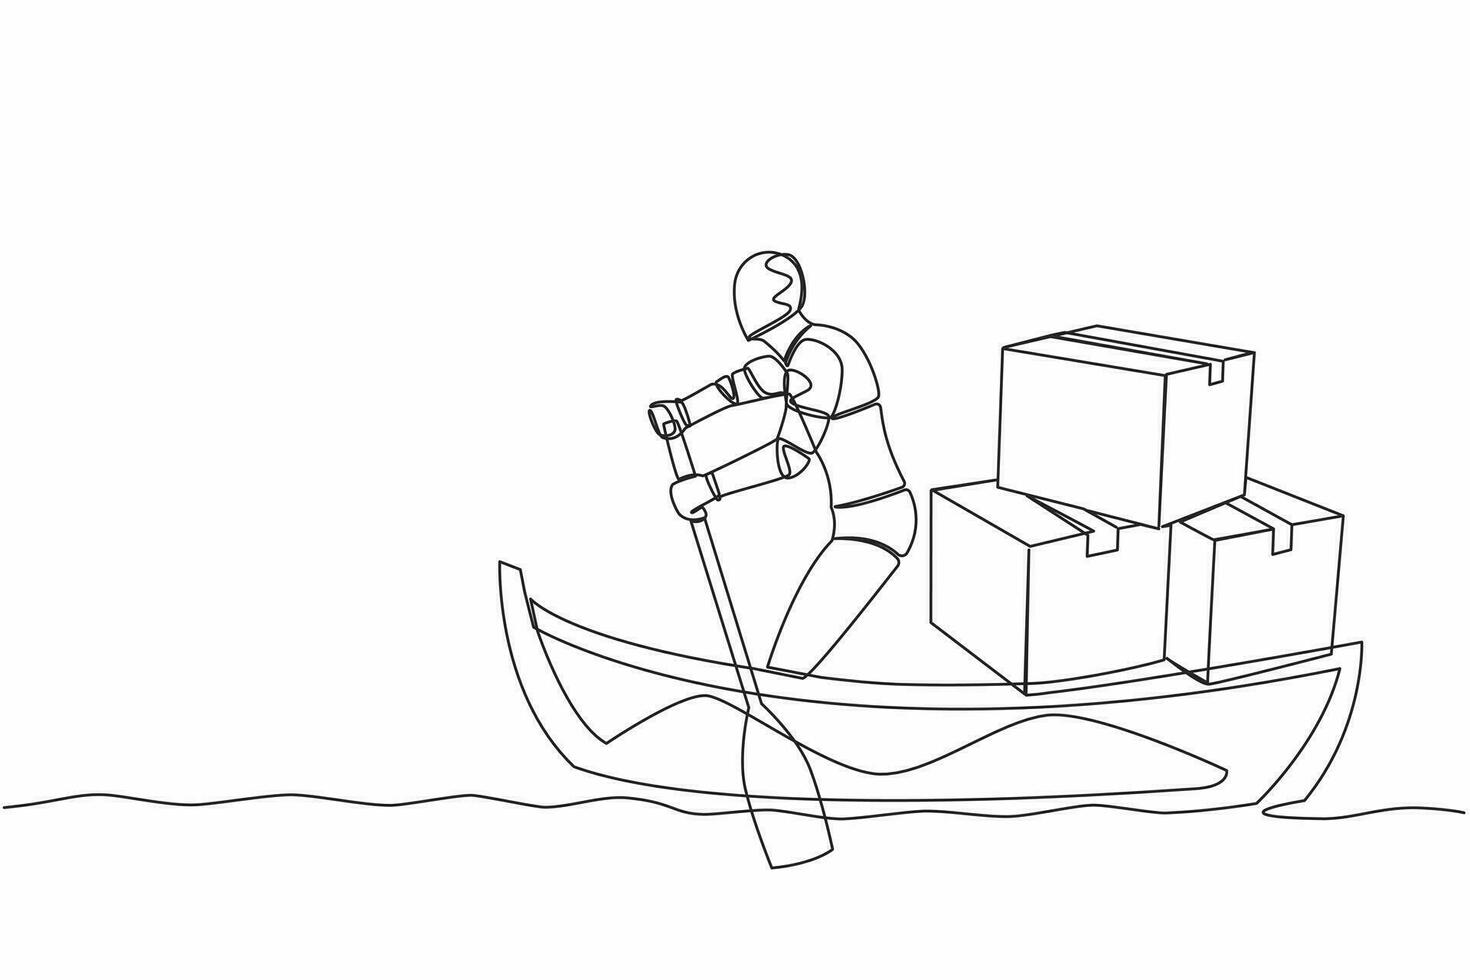 kontinuerlig ett linje teckning av robot segling bort på båt med lugg av kartong. hav frakt transport. humanoid robot cybernetiska organism. enda linje dra design vektor grafisk illustration